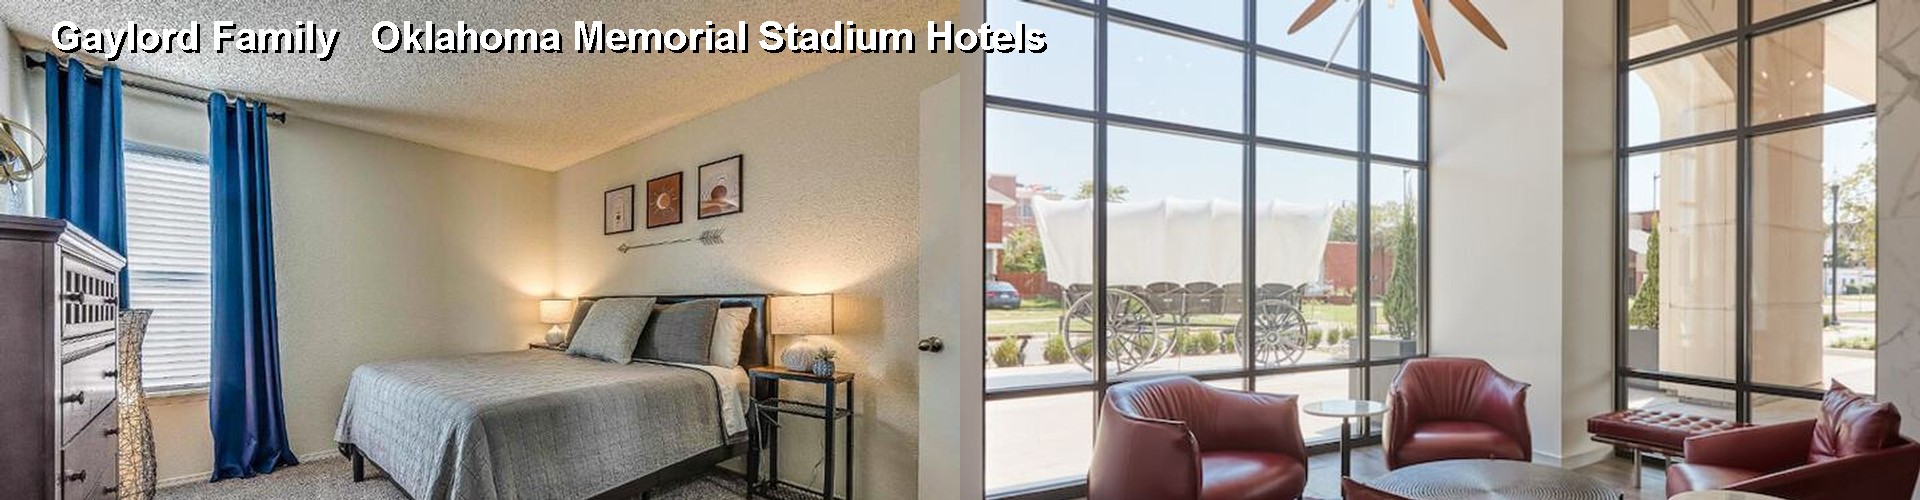 4 Best Hotels near Gaylord Family   Oklahoma Memorial Stadium